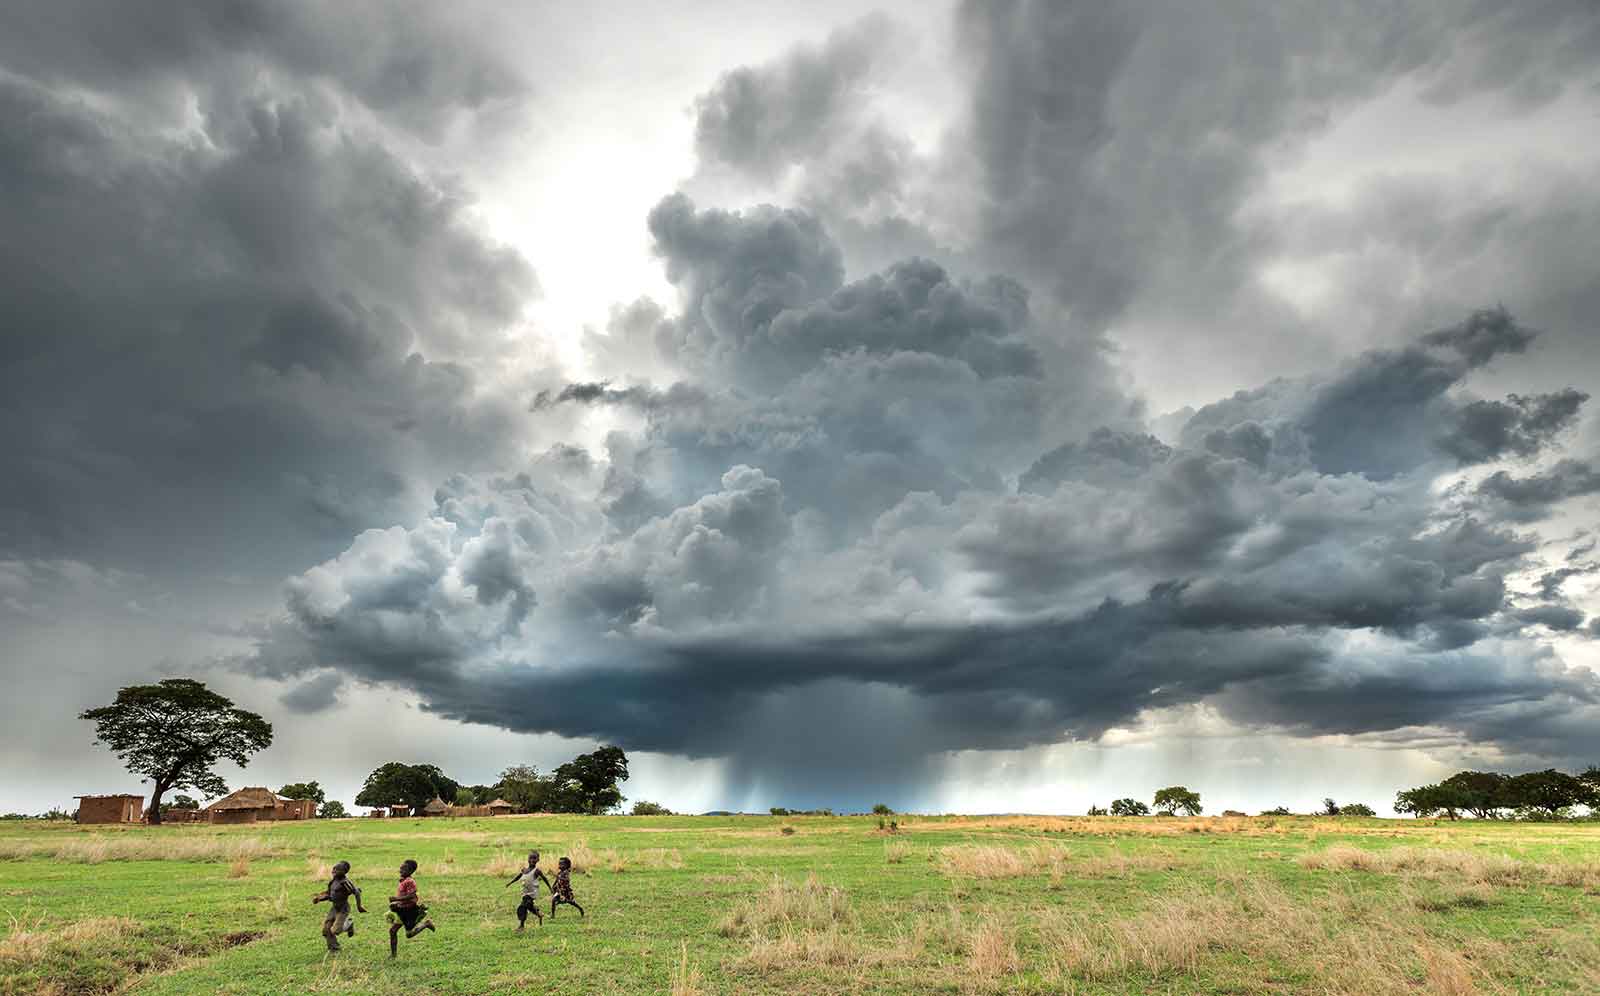 Children run across a field as stormy cumulonimbus clouds pour rain to a village in Magoye, Zambia.